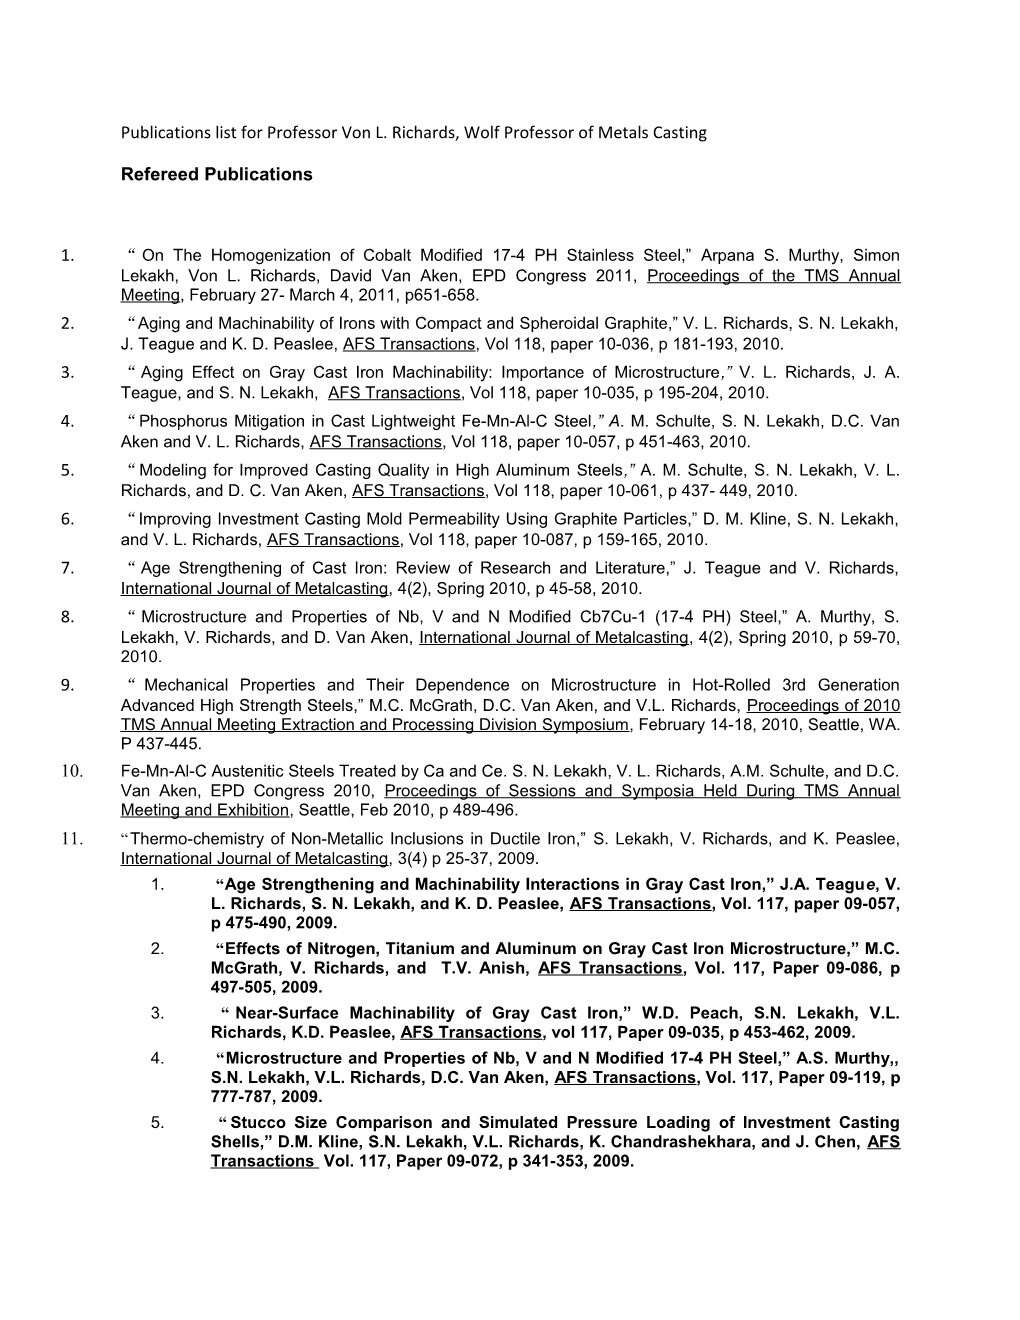 Publications List for Professor Von L. Richards, Wolf Professor of Metals Casting